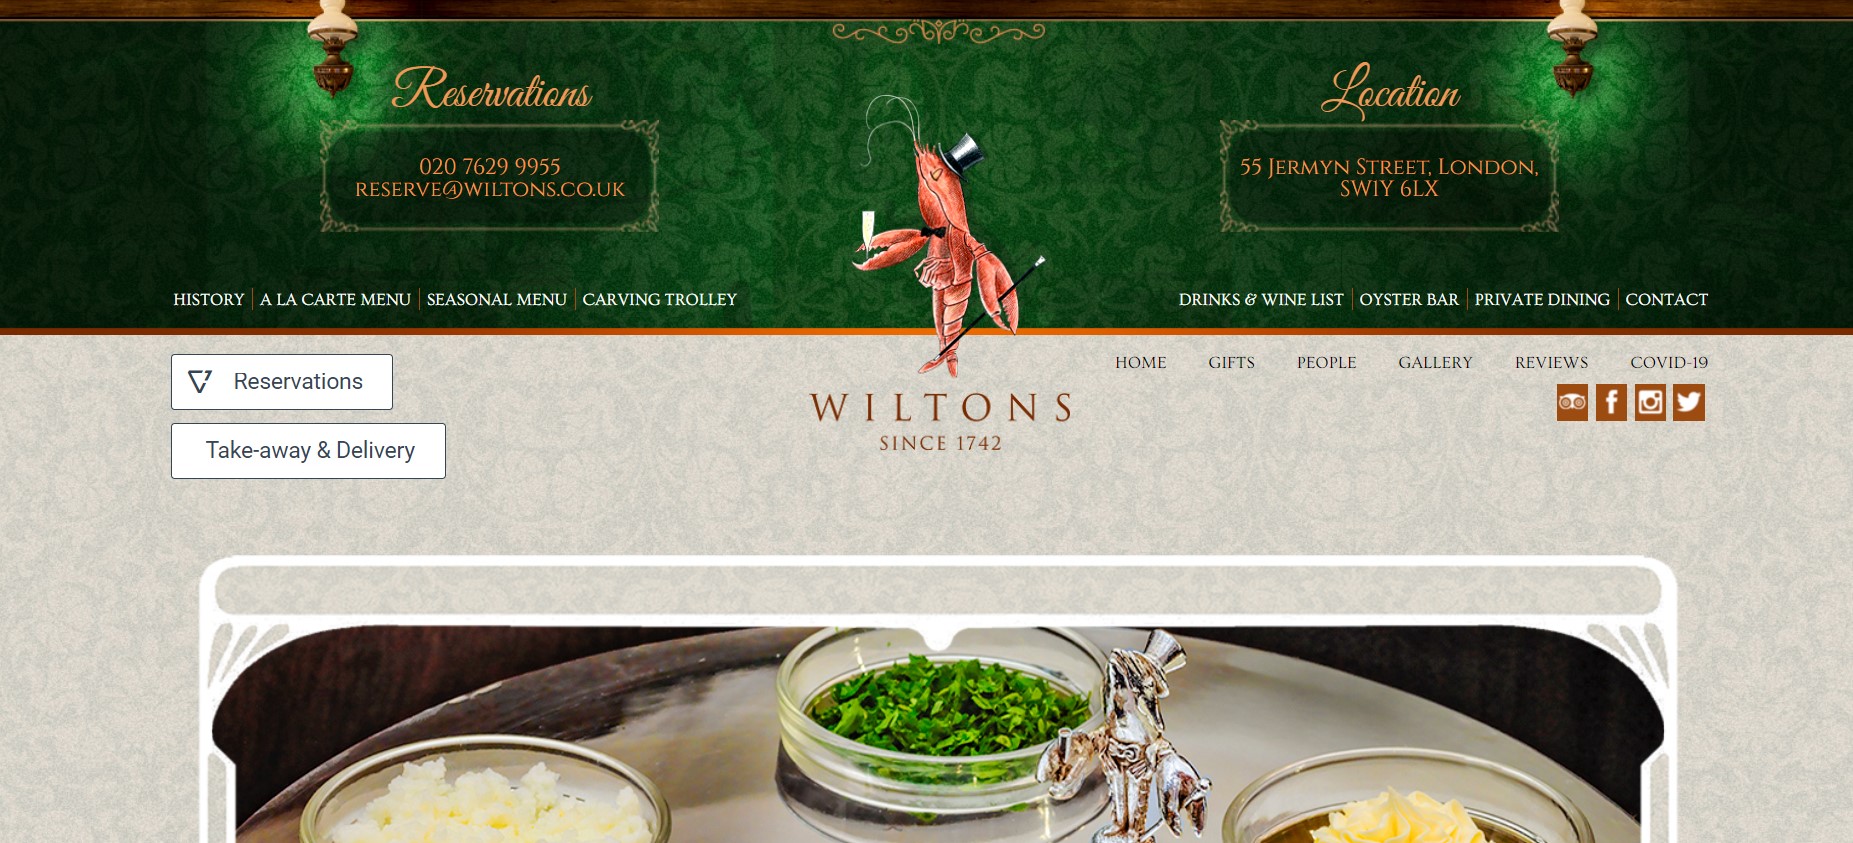 Wiltons Restaurant